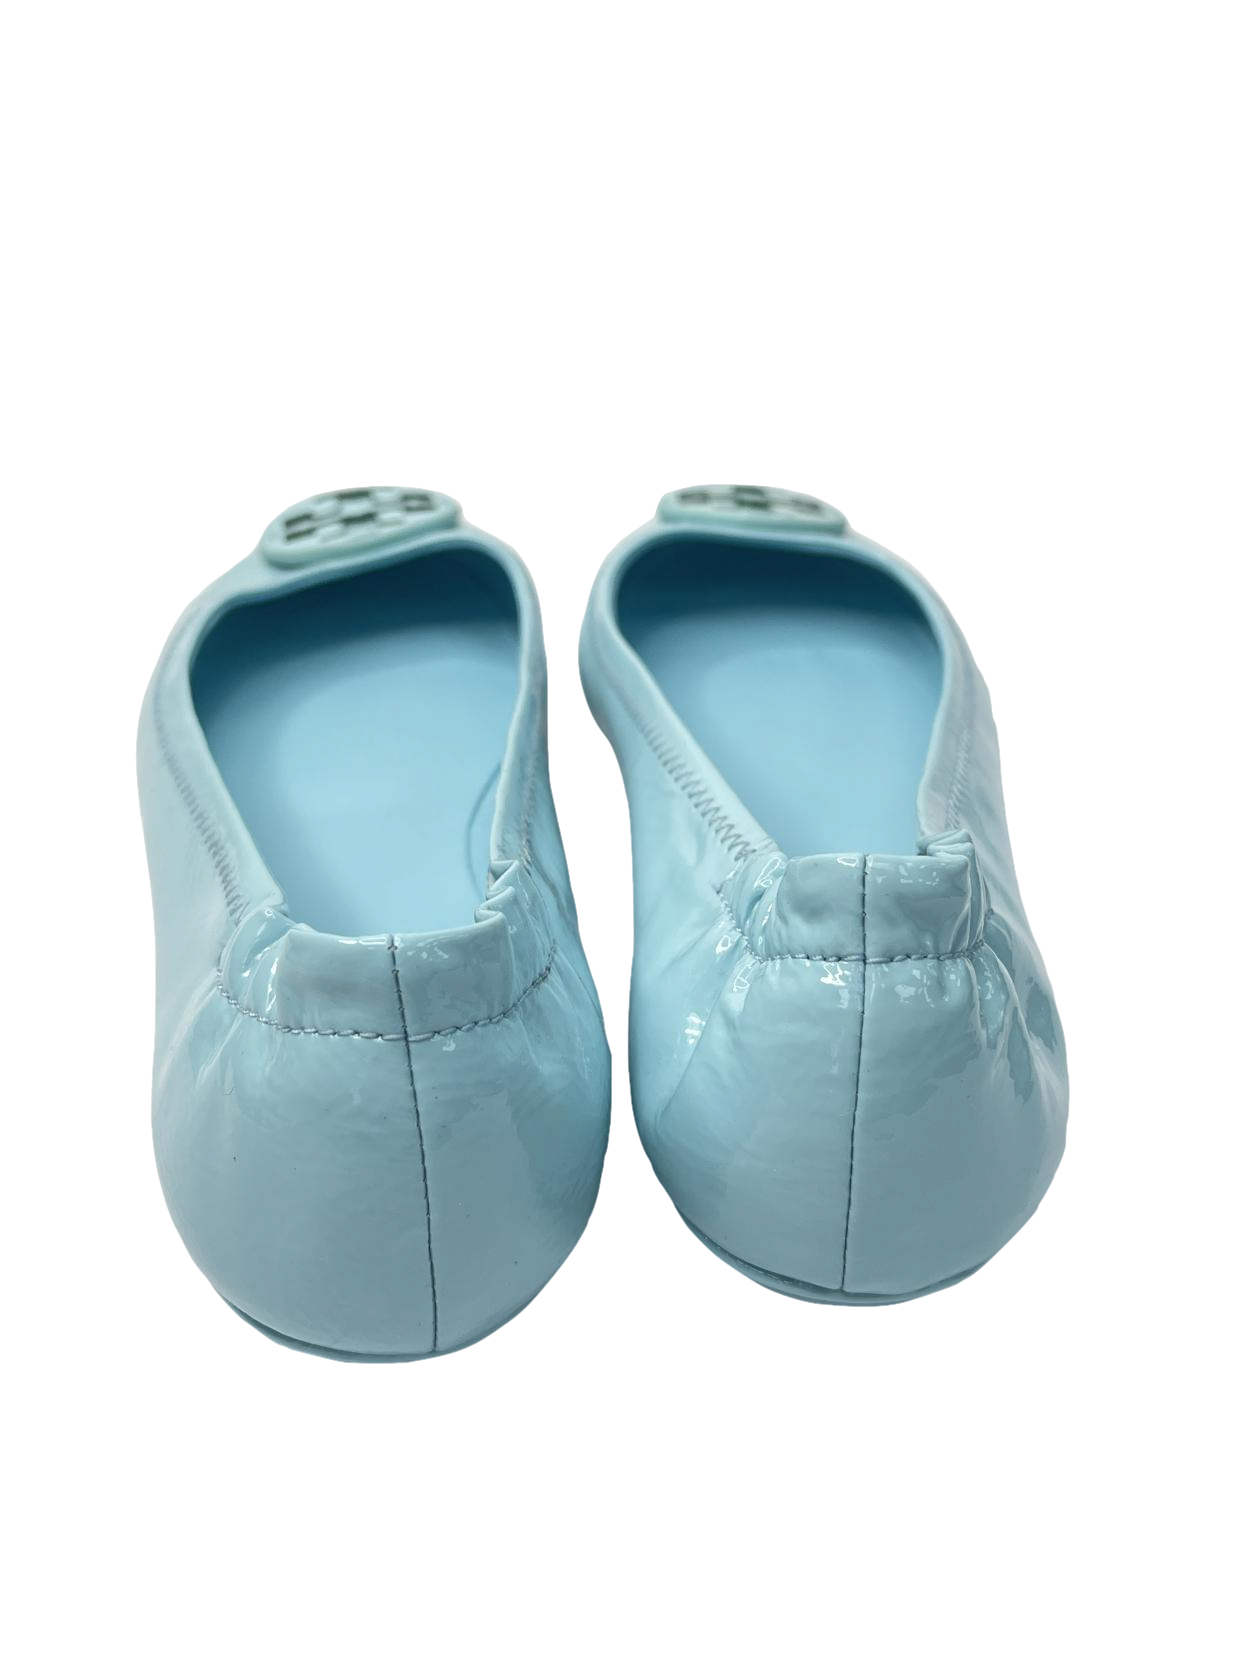 Tory Burch Baby Blue Patent 'minnie' Logo Ballerina Flats UK 4 EU 37 👠